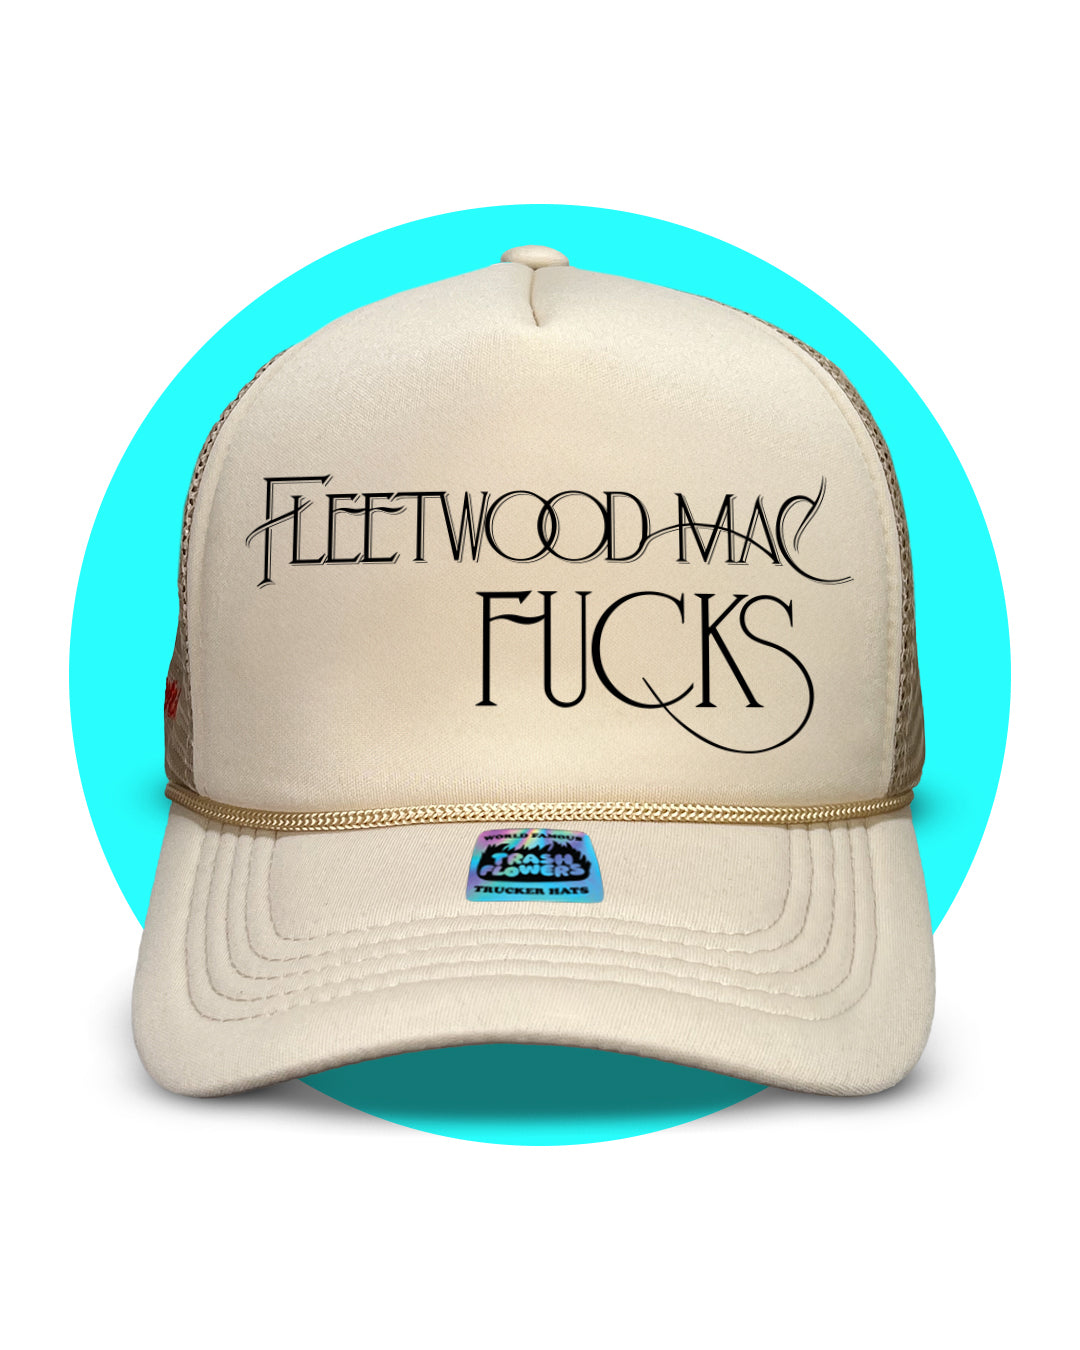 Fleetwood Mac Fucks Trucker Hat